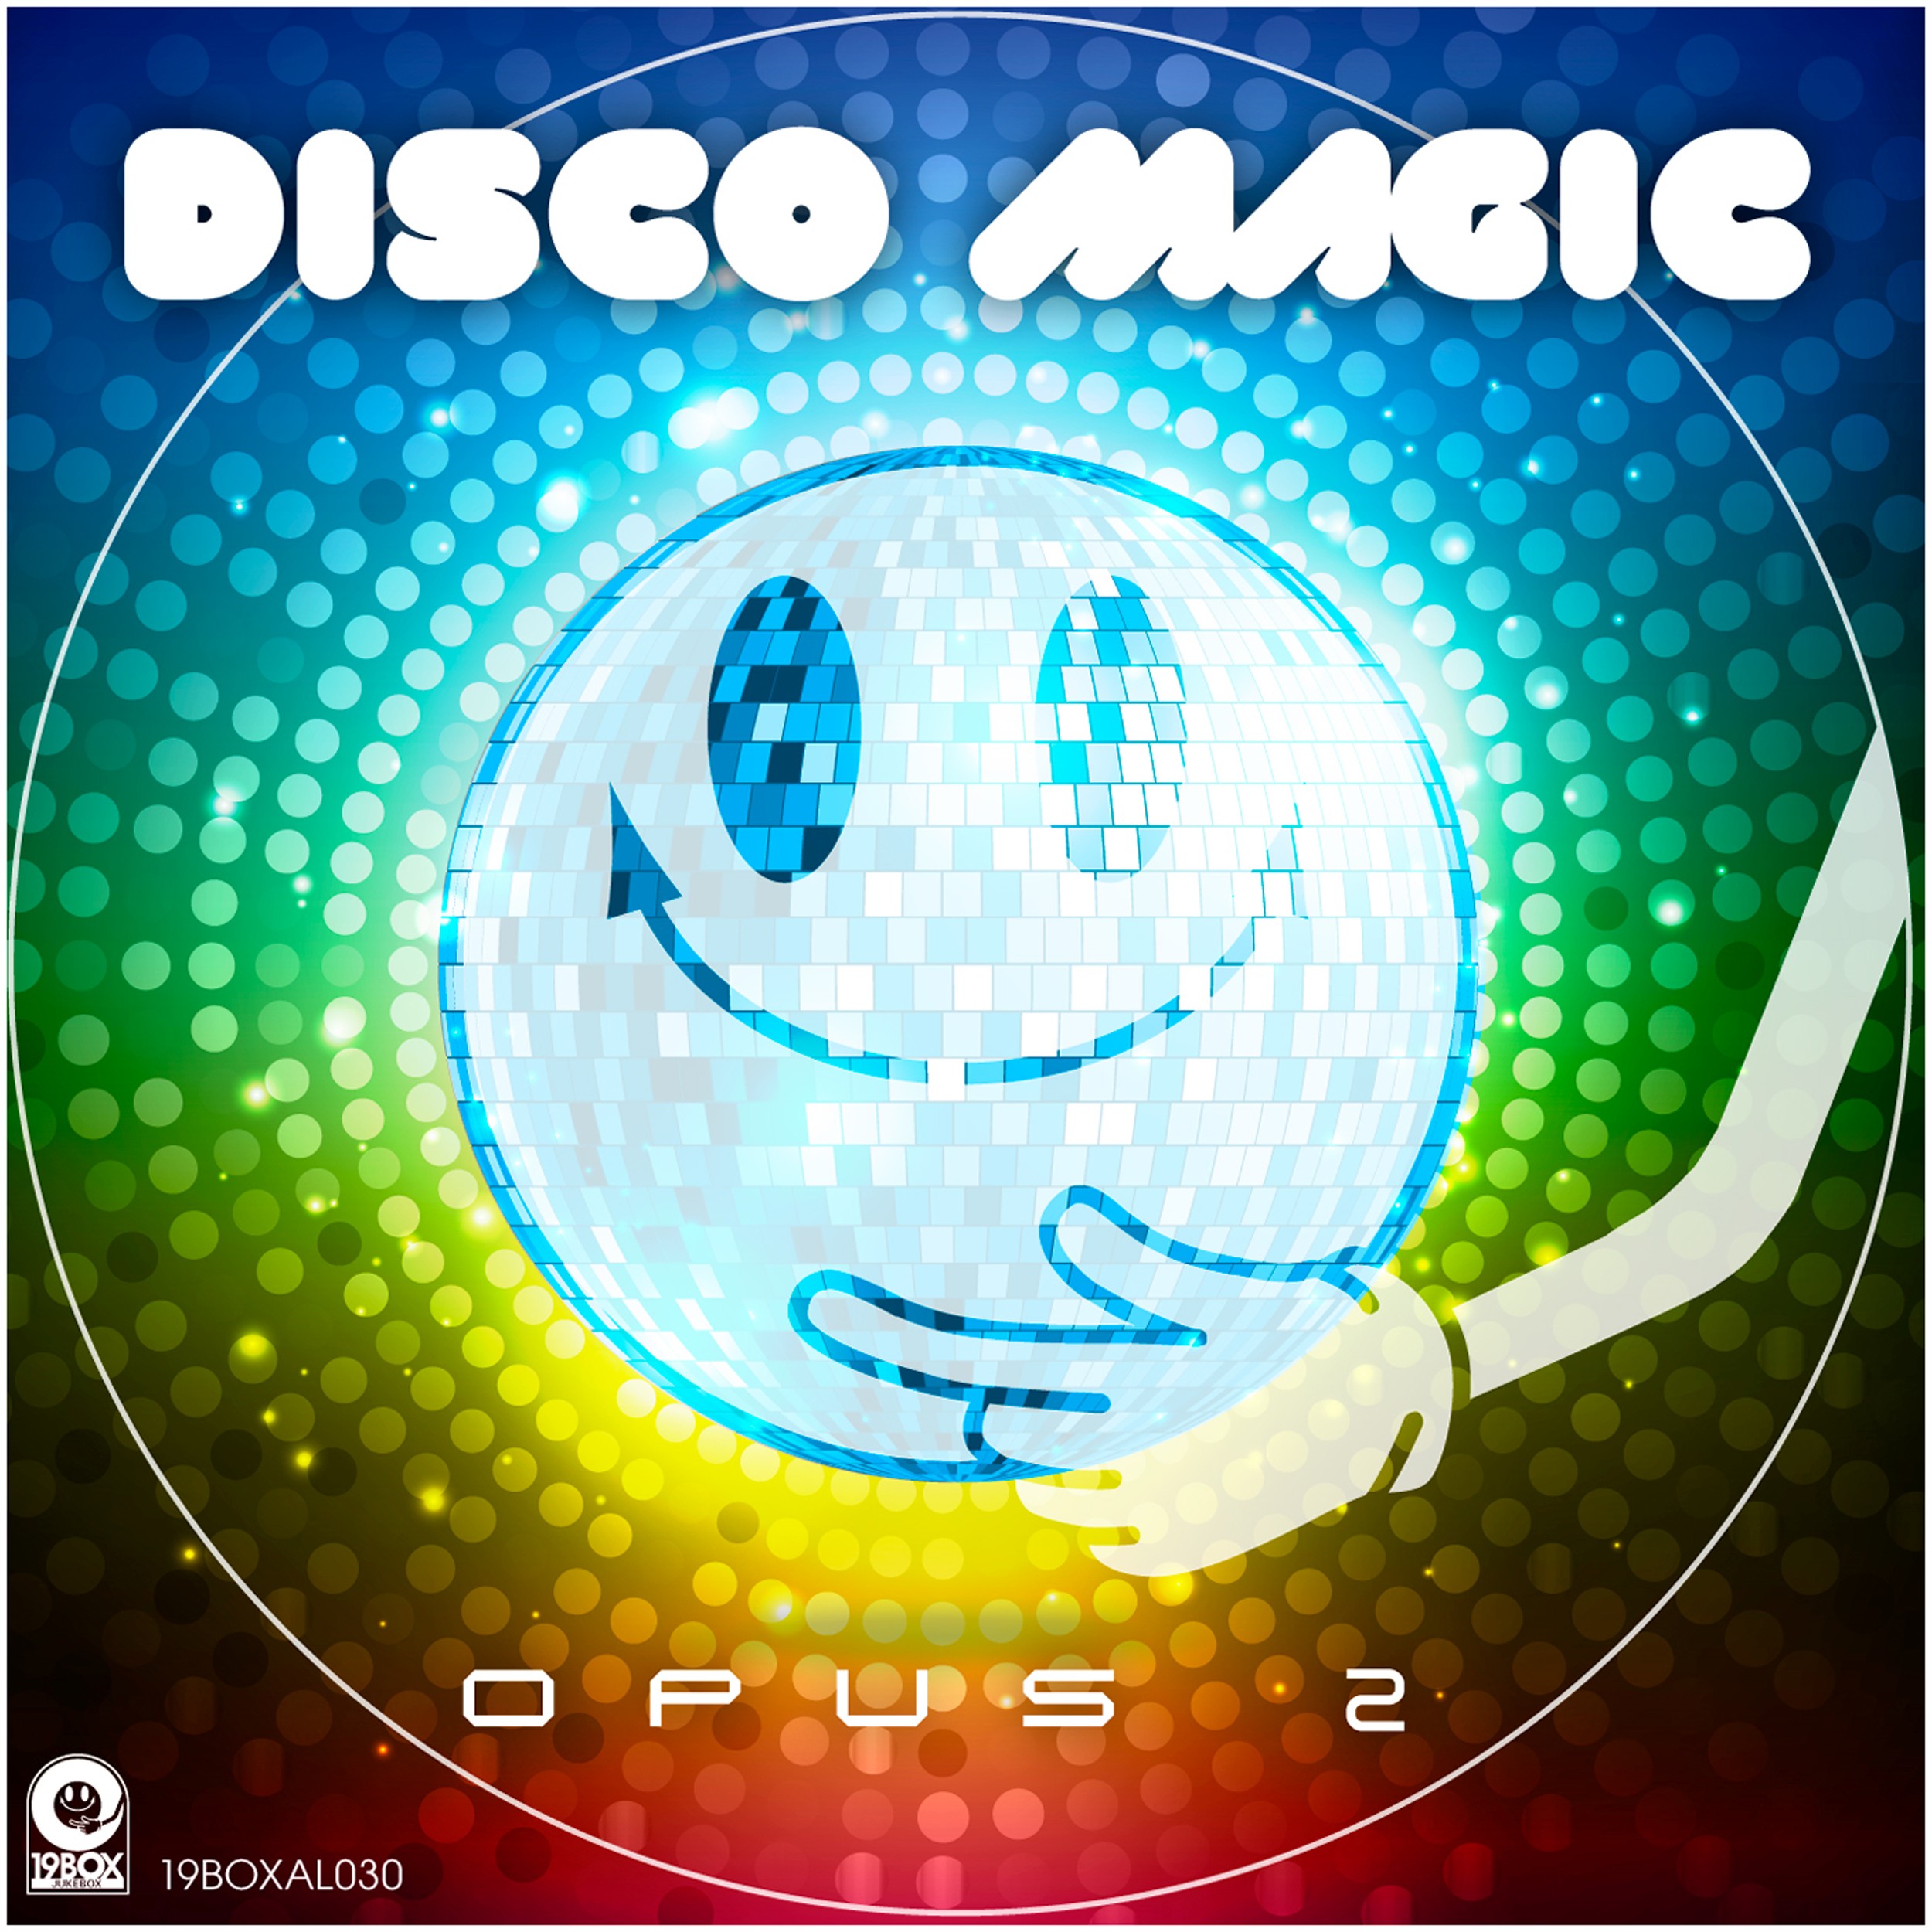 Disco magic. Disco магия CD. Логотип Disco Magic. "Dim" Disco CD. Various Disco 82.